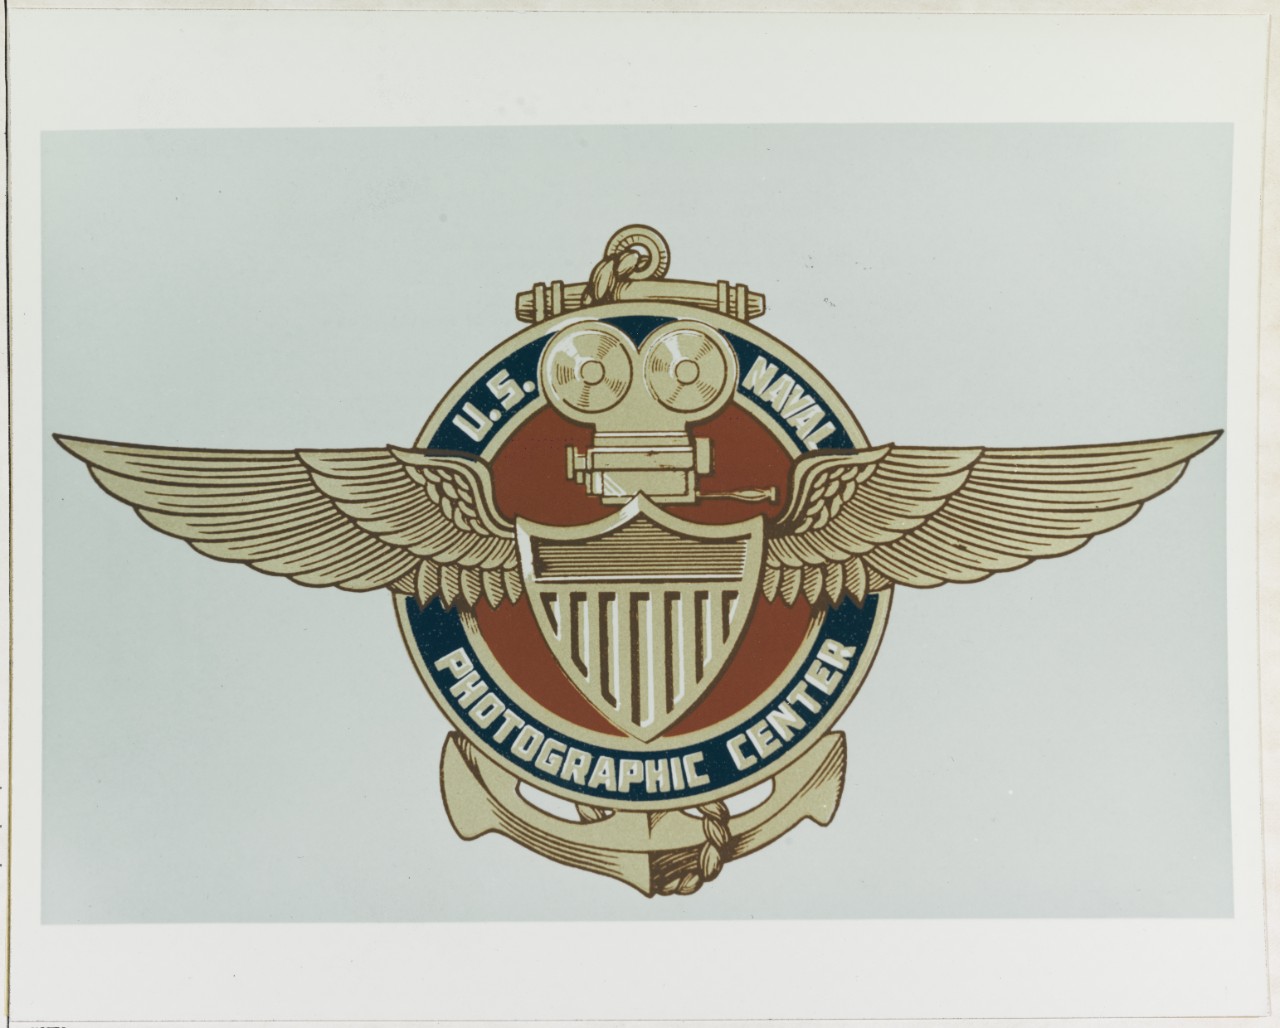 U.S. Naval Photographic Center Insignia, 1958